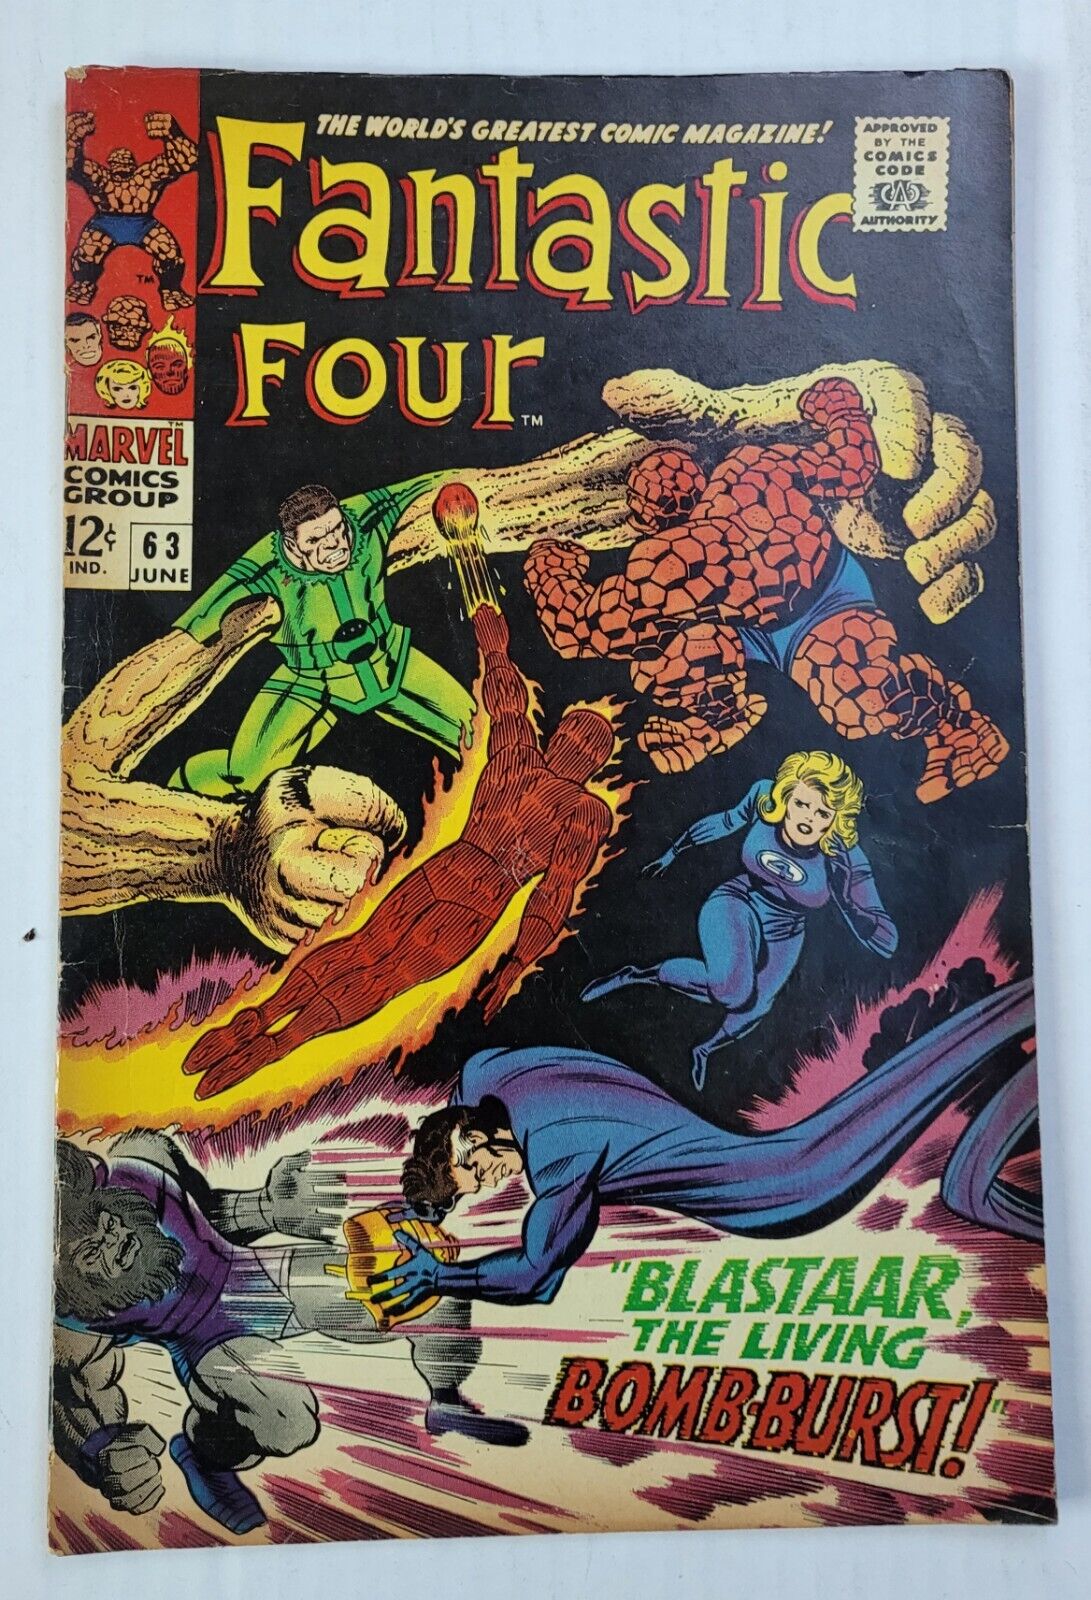 Fantastic Four #63 (Jun 1967, Marvel)